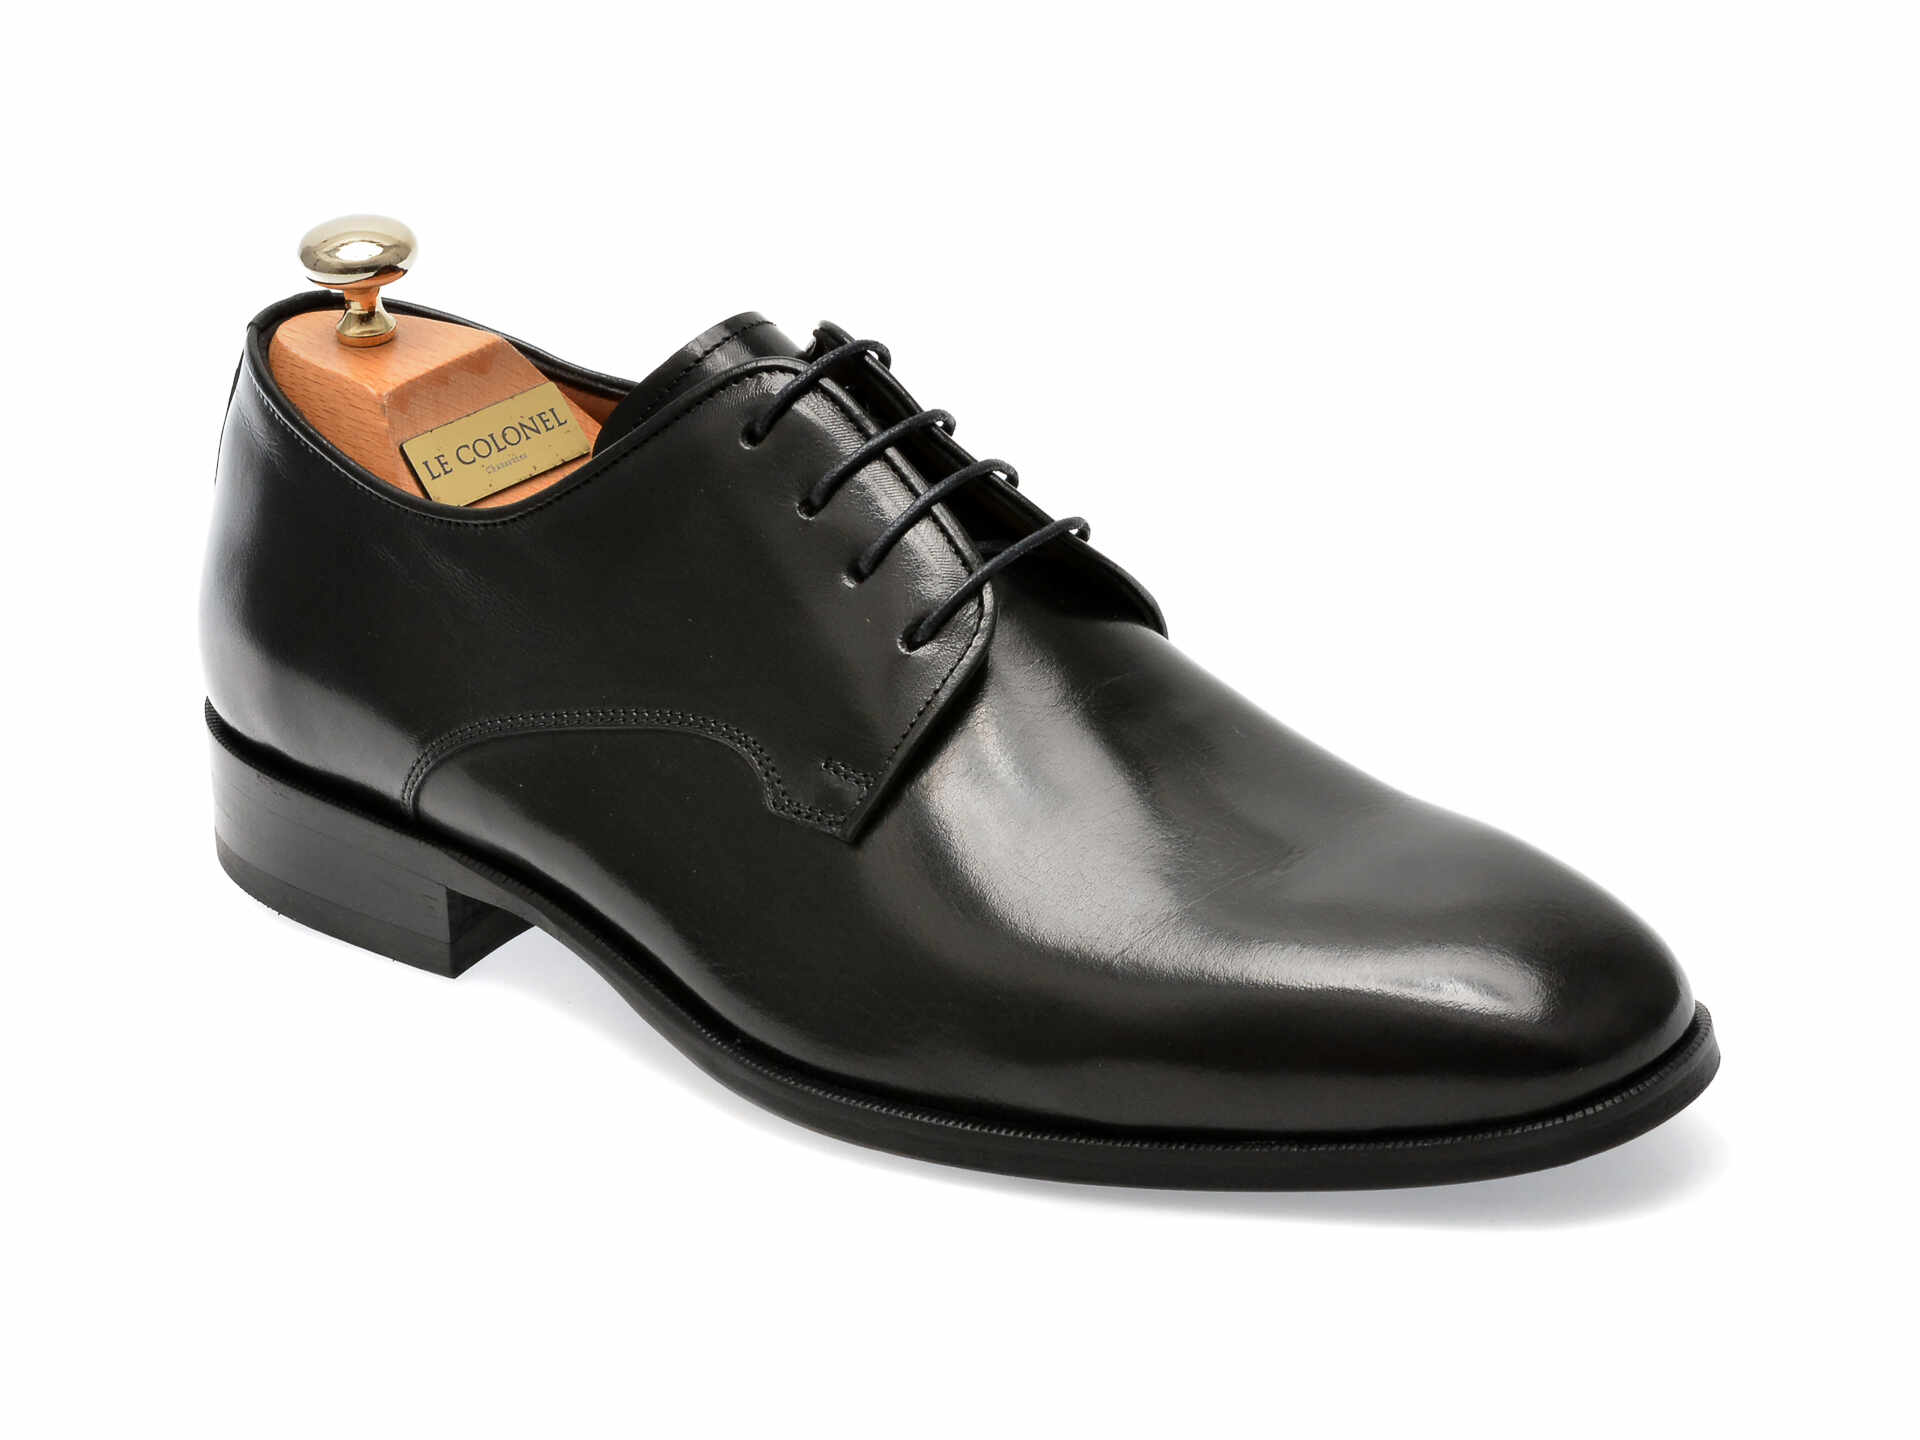 Pantofi LE COLONEL negri, 48486, din piele naturala